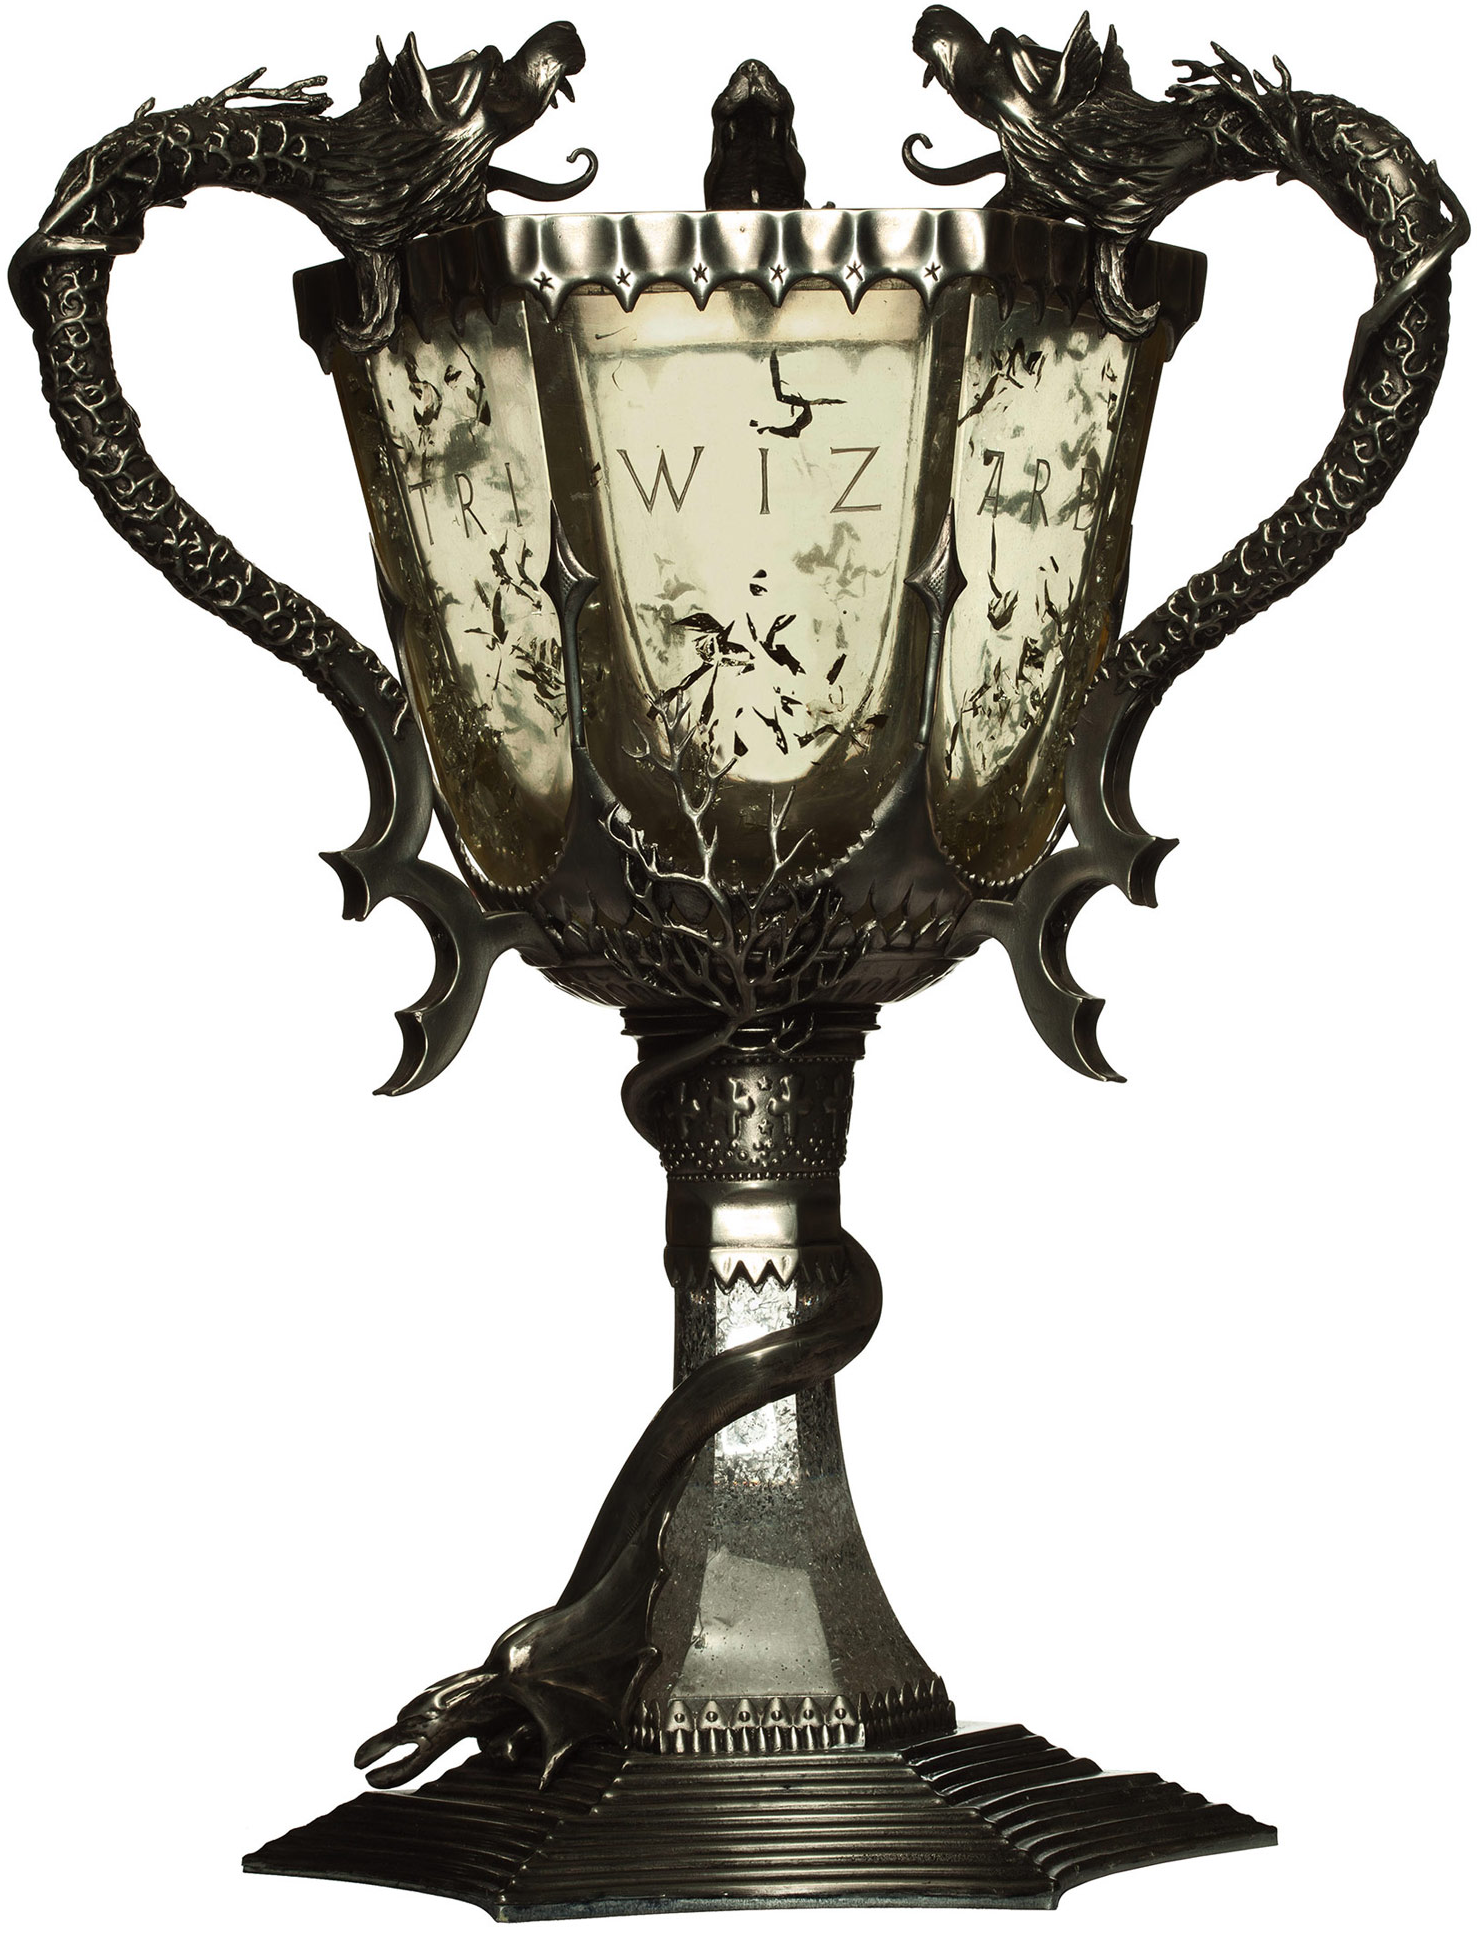 Triwizard Cup | Harry Potter Wiki | Fandom